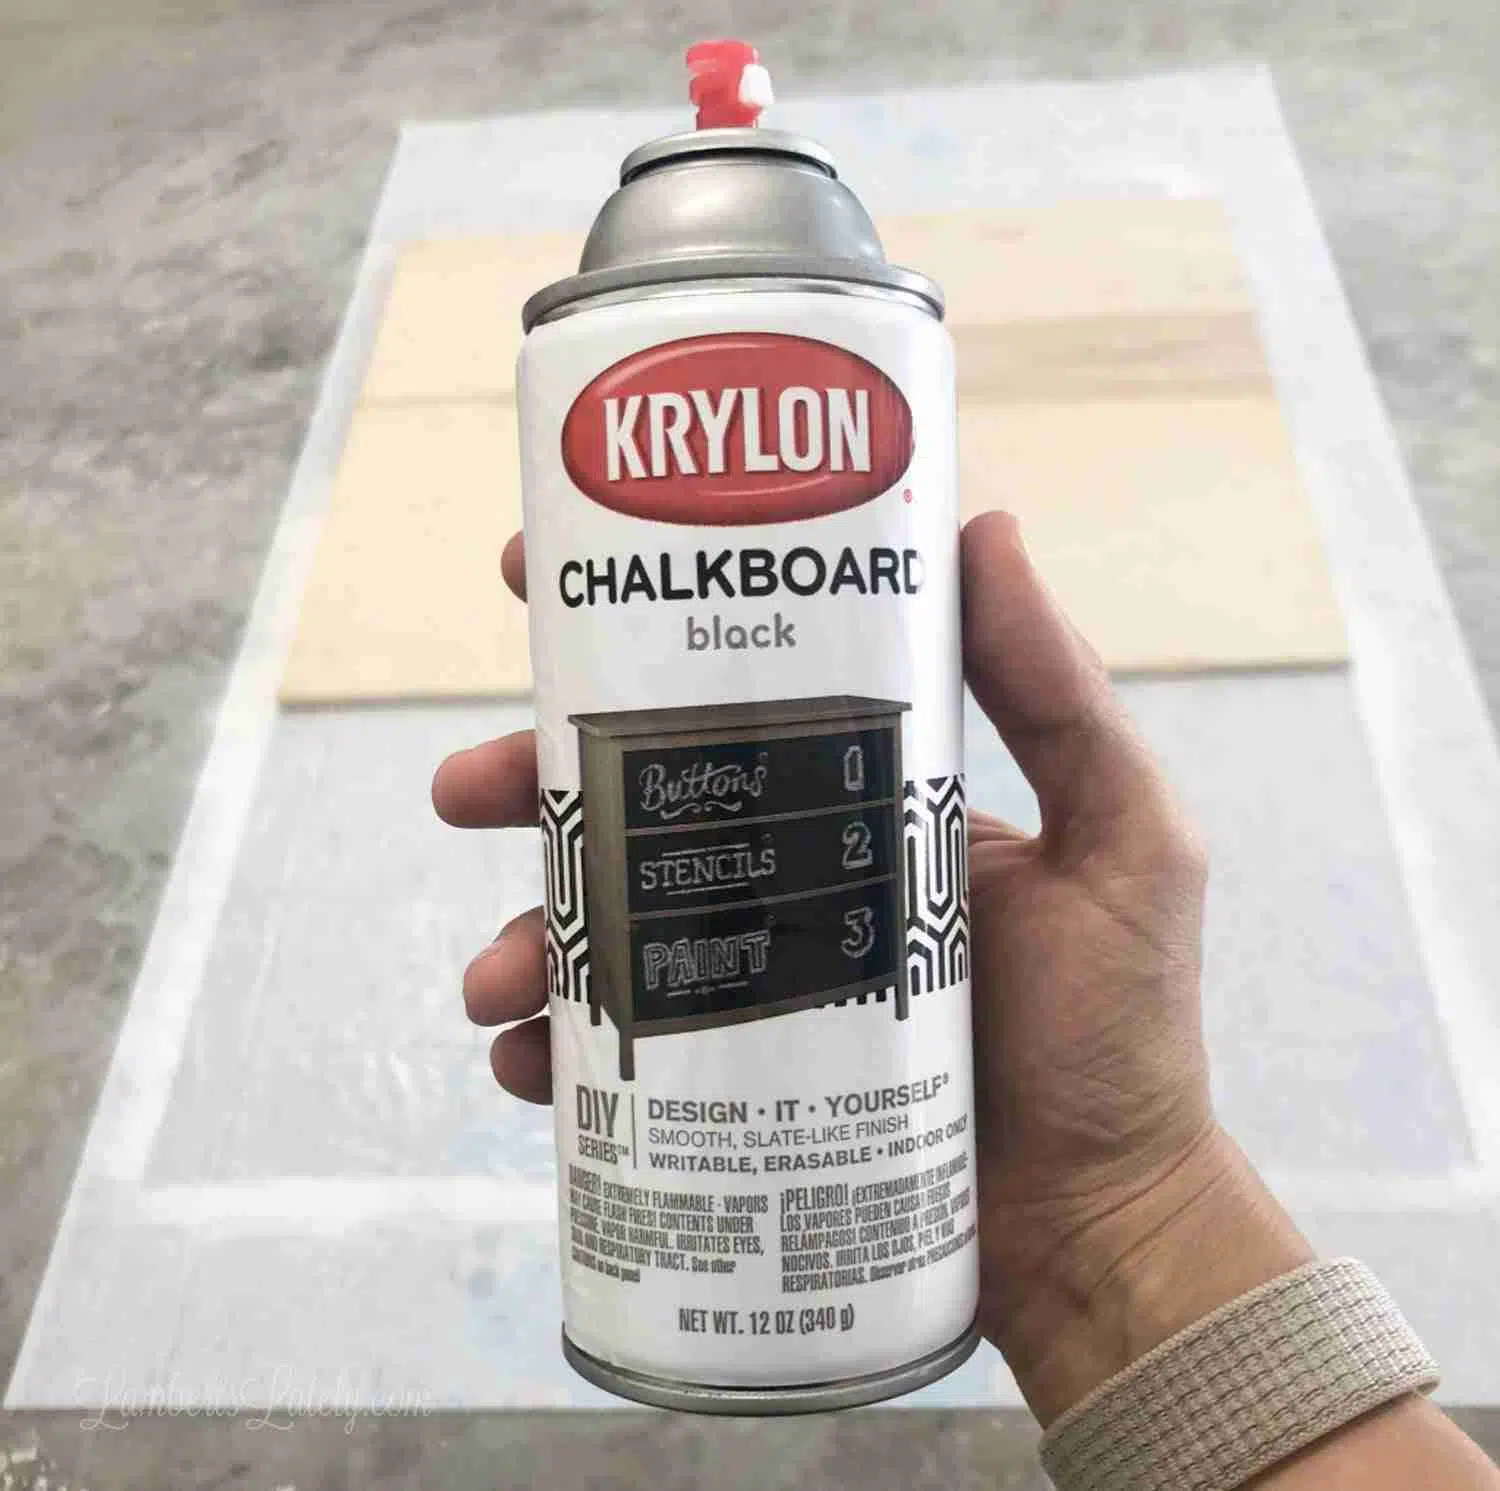 Krylon chalkboard spray paint.